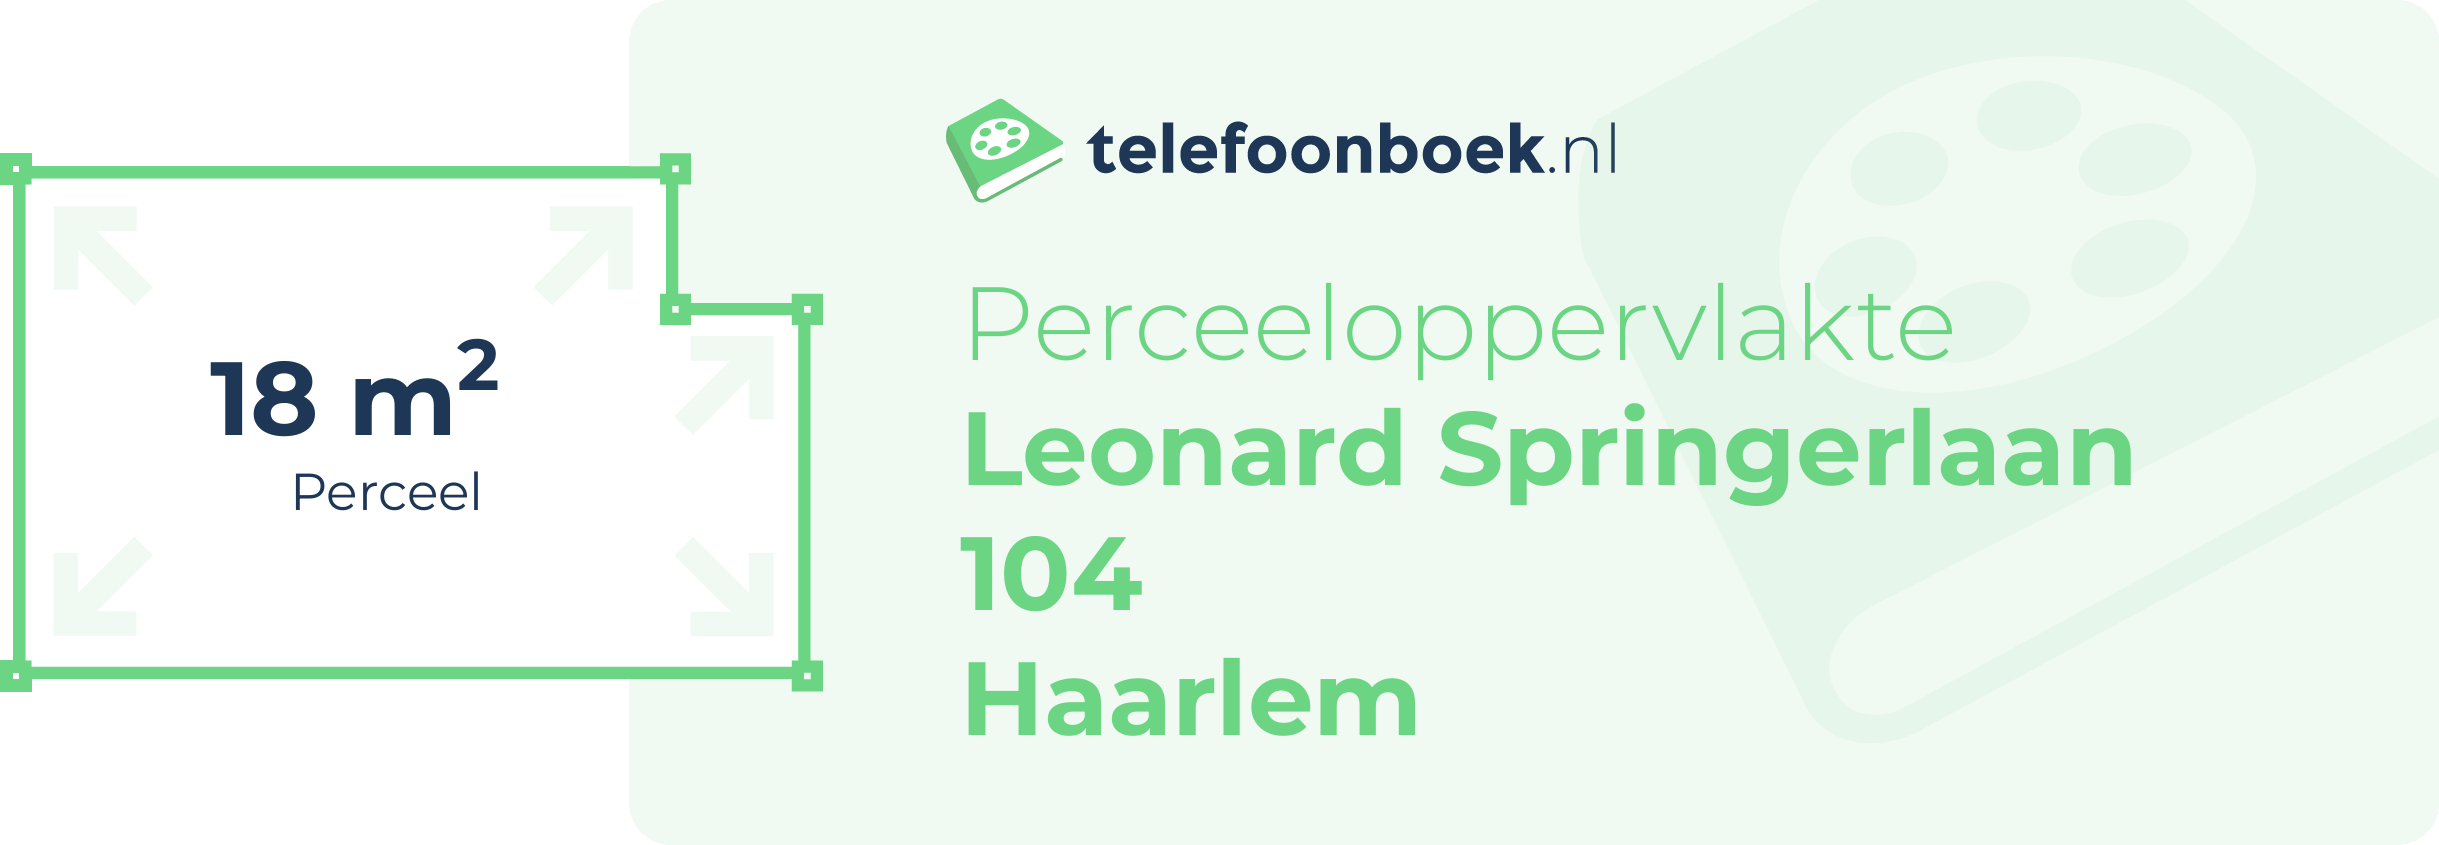 Perceeloppervlakte Leonard Springerlaan 104 Haarlem